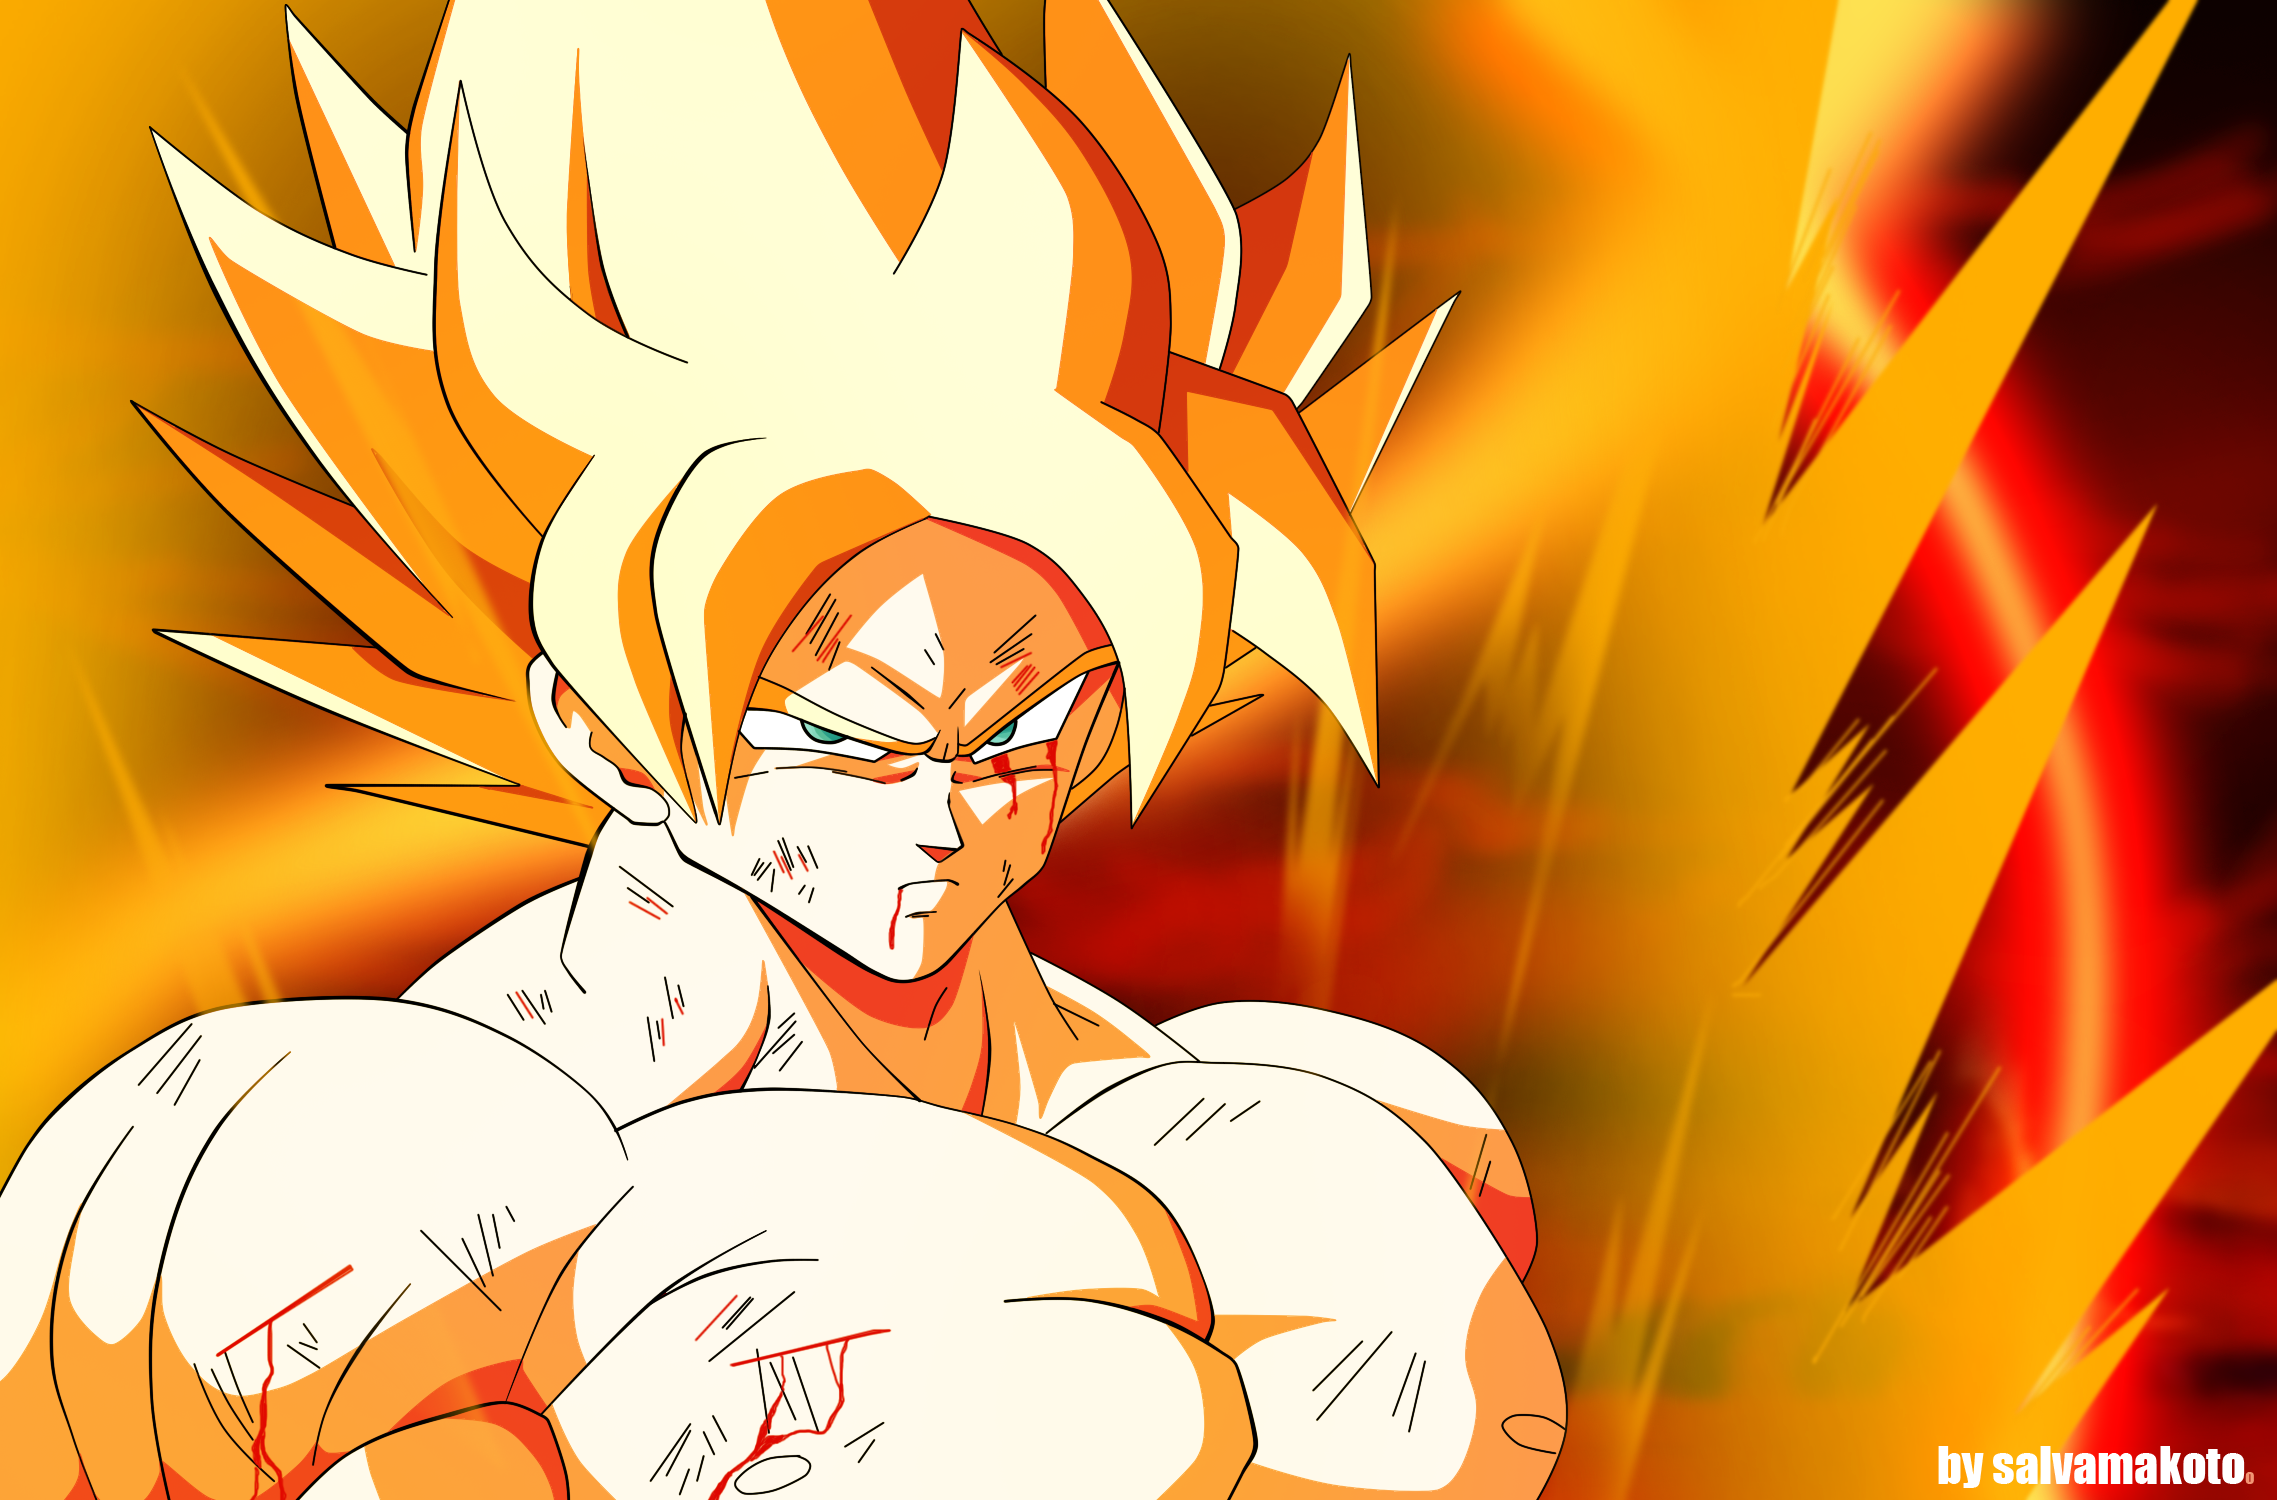 Goku The Super Saiyan By Salvamakoto